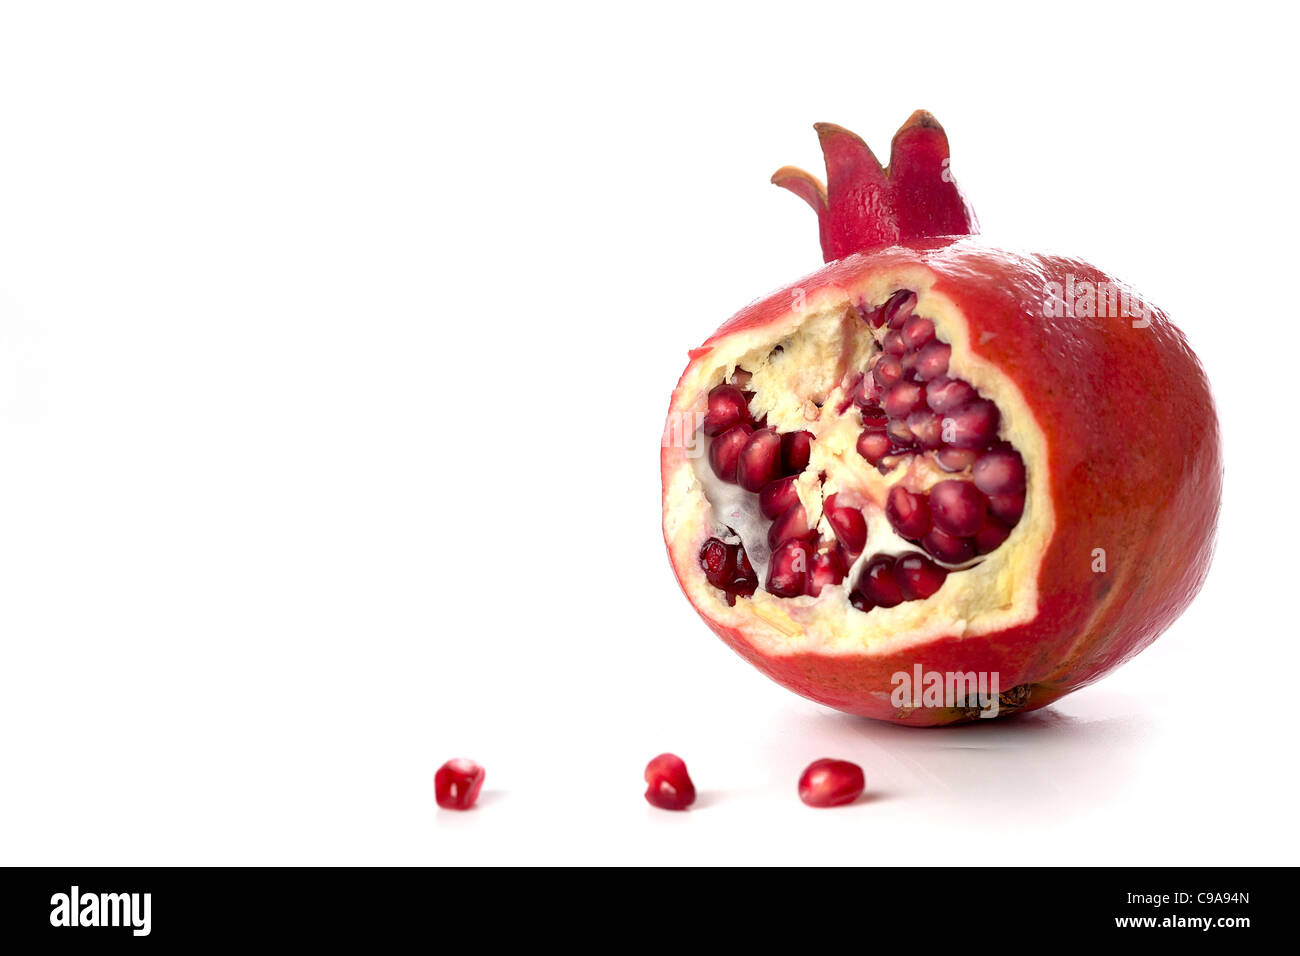 pomegranate with seeds seeds, Symbols of Roah Hashanah the Jewish New Year on white background Stock Photo